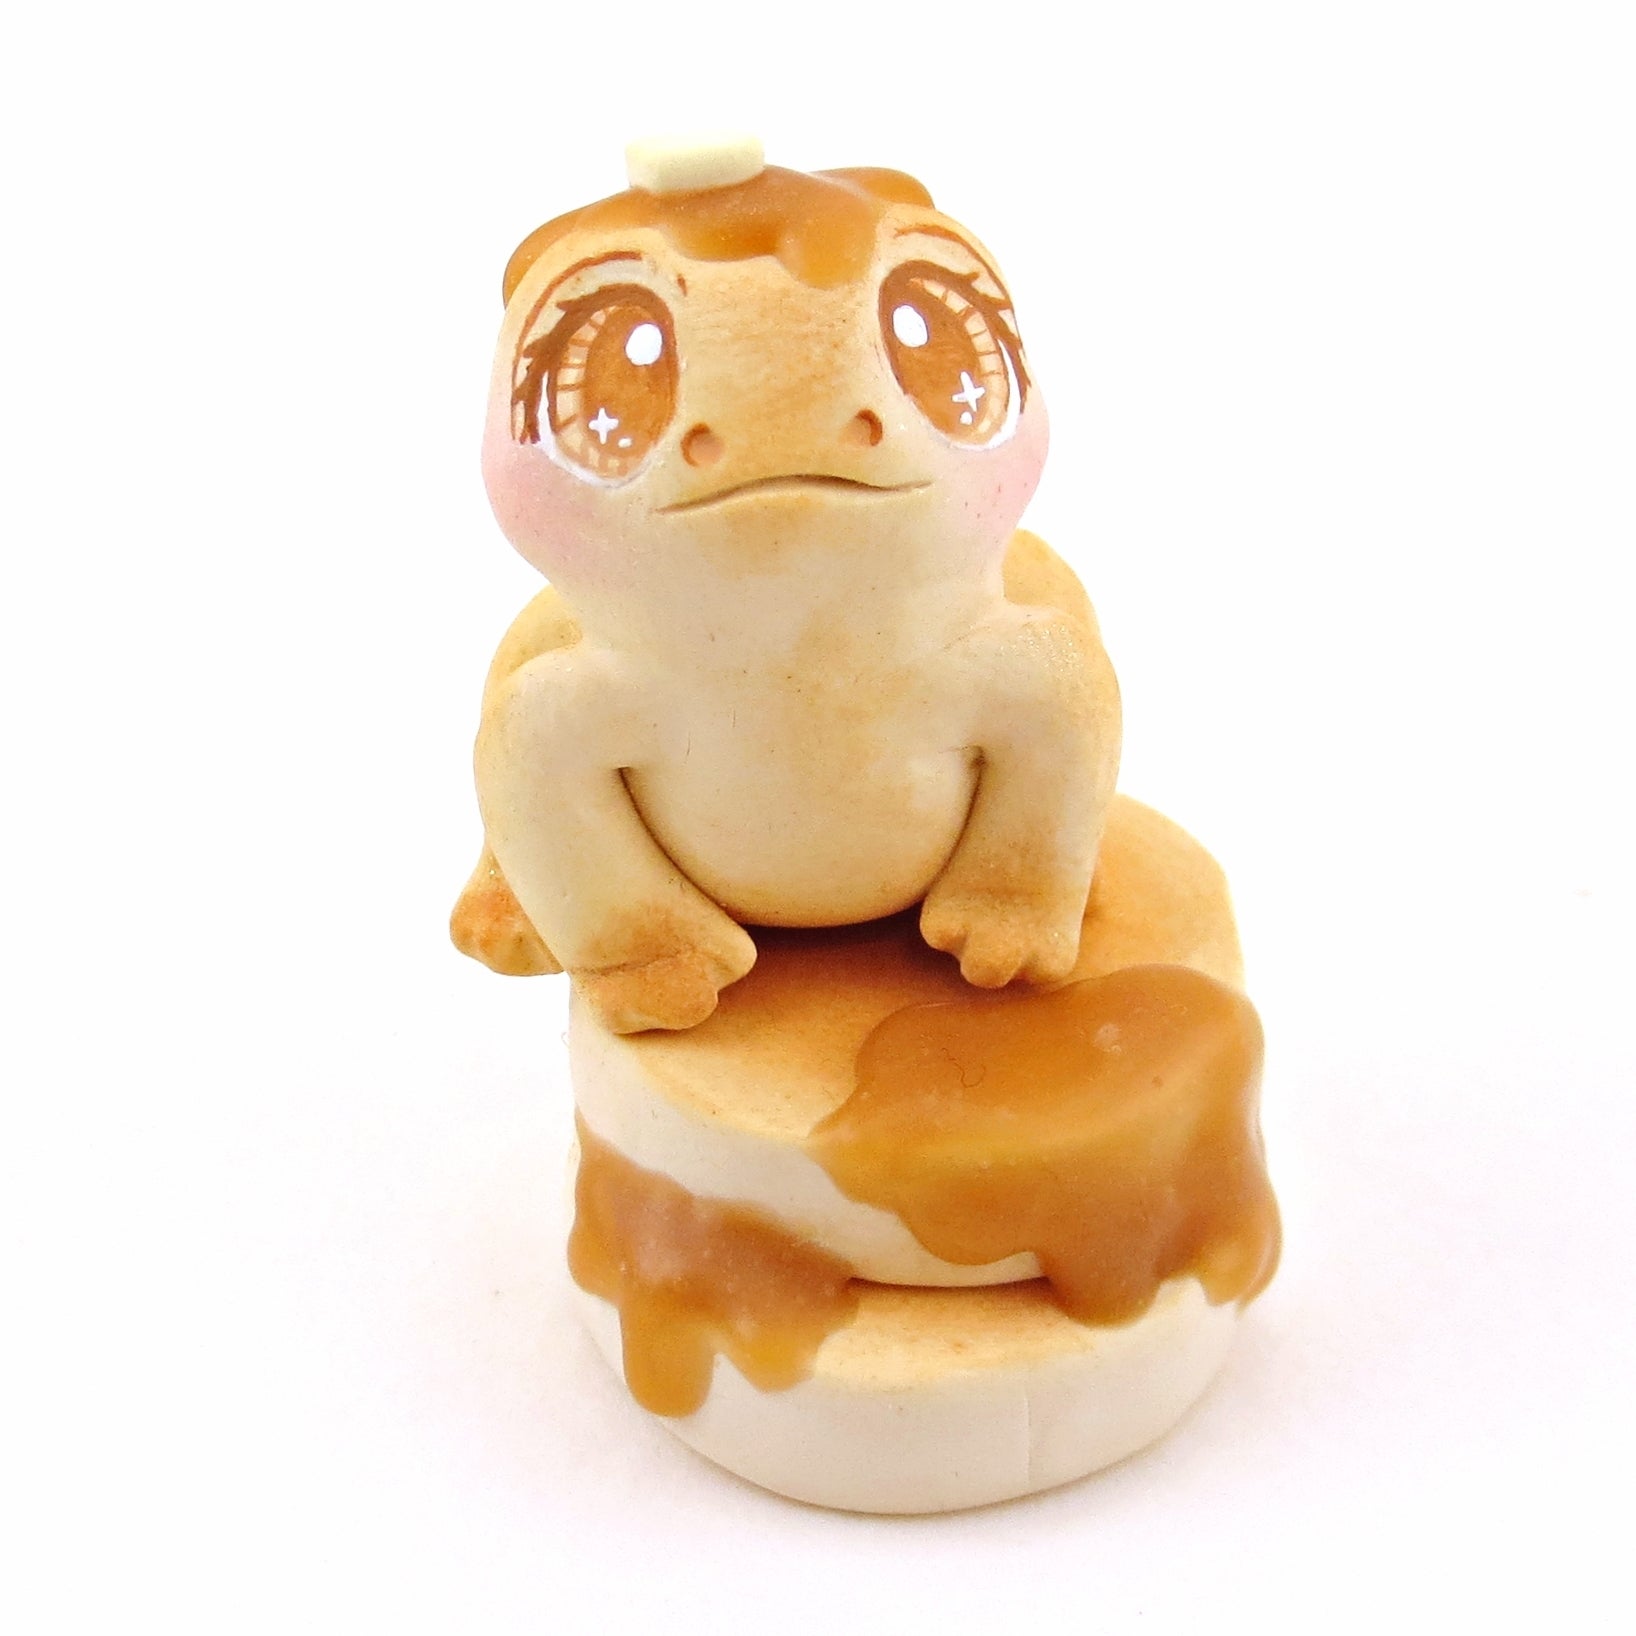 Pancake Frog Figurine - "Breakfast Buddies" Polymer Clay Animal Collection